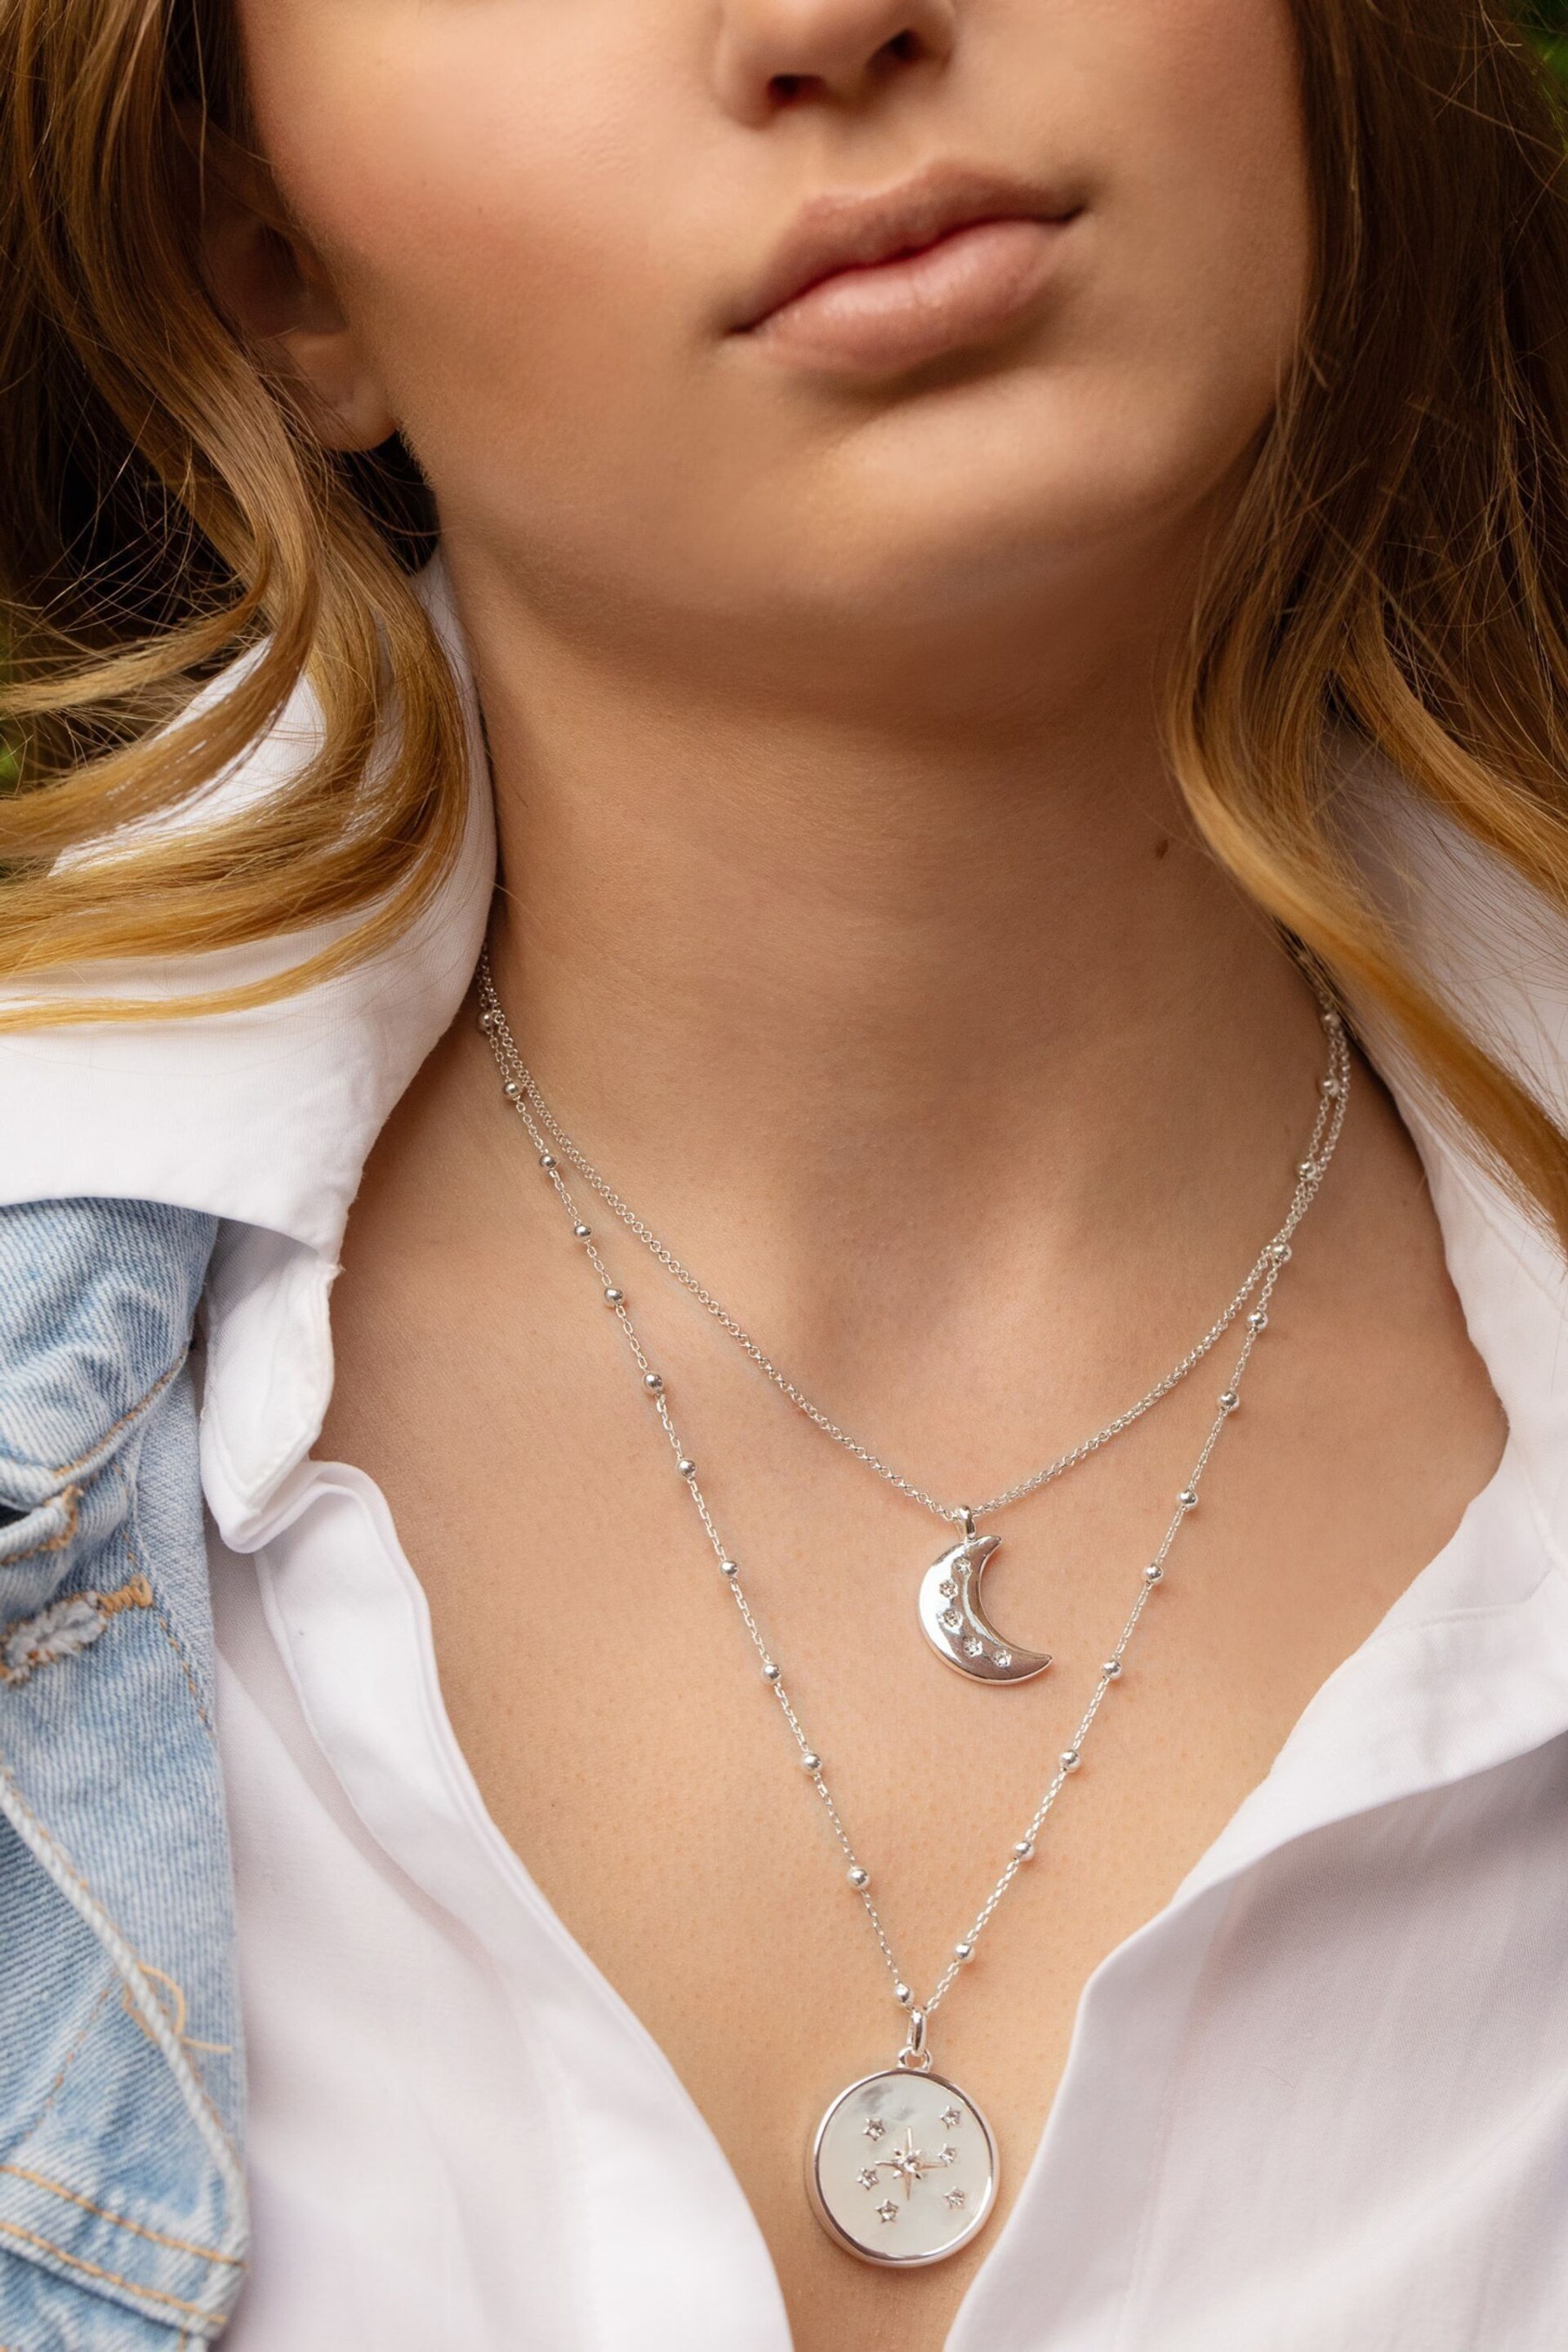 Caramel Jewellery London Silver Tone Constellation White Quartz Layered Necklace - Image 4 of 6